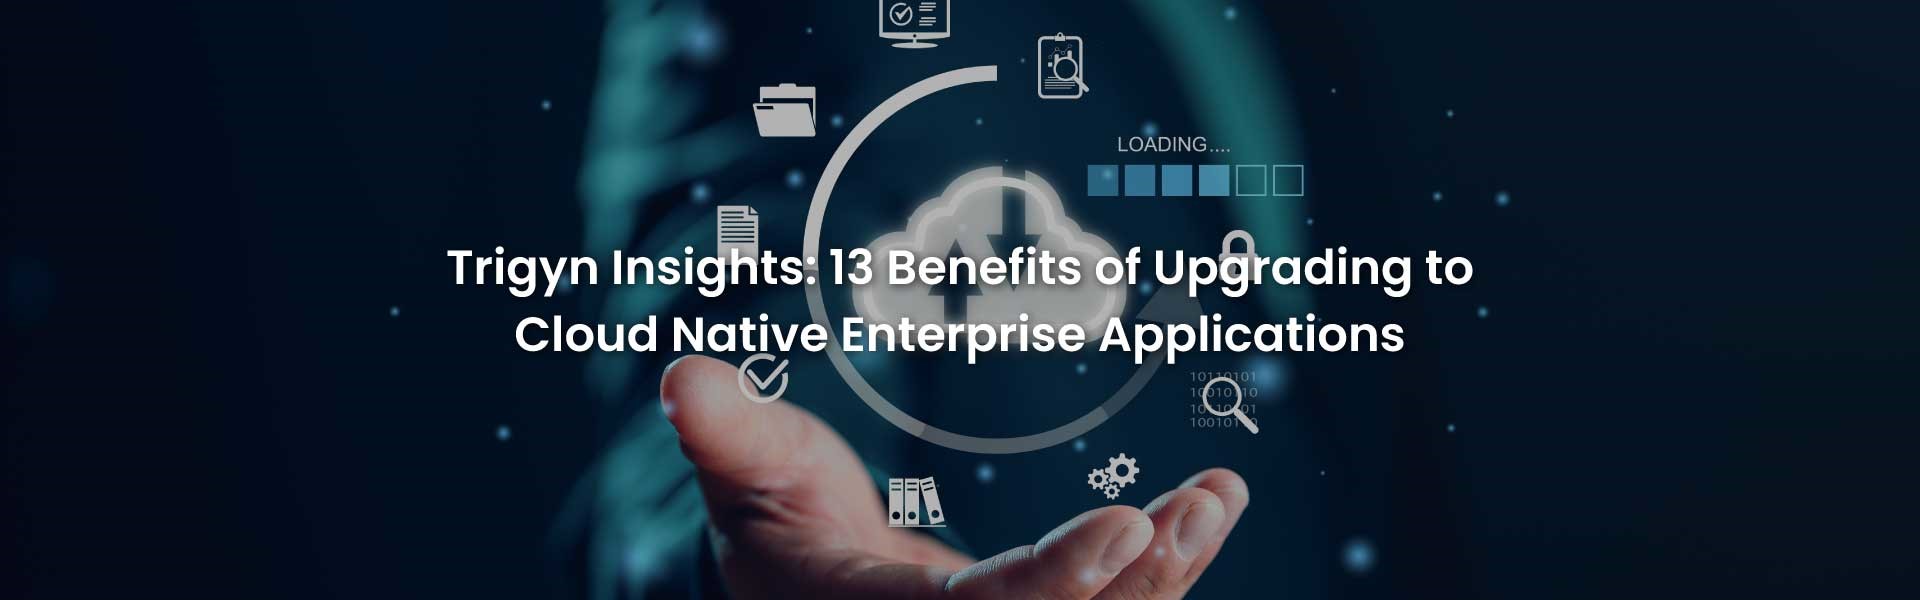 Benefits of Cloud Native Enterprise Applications